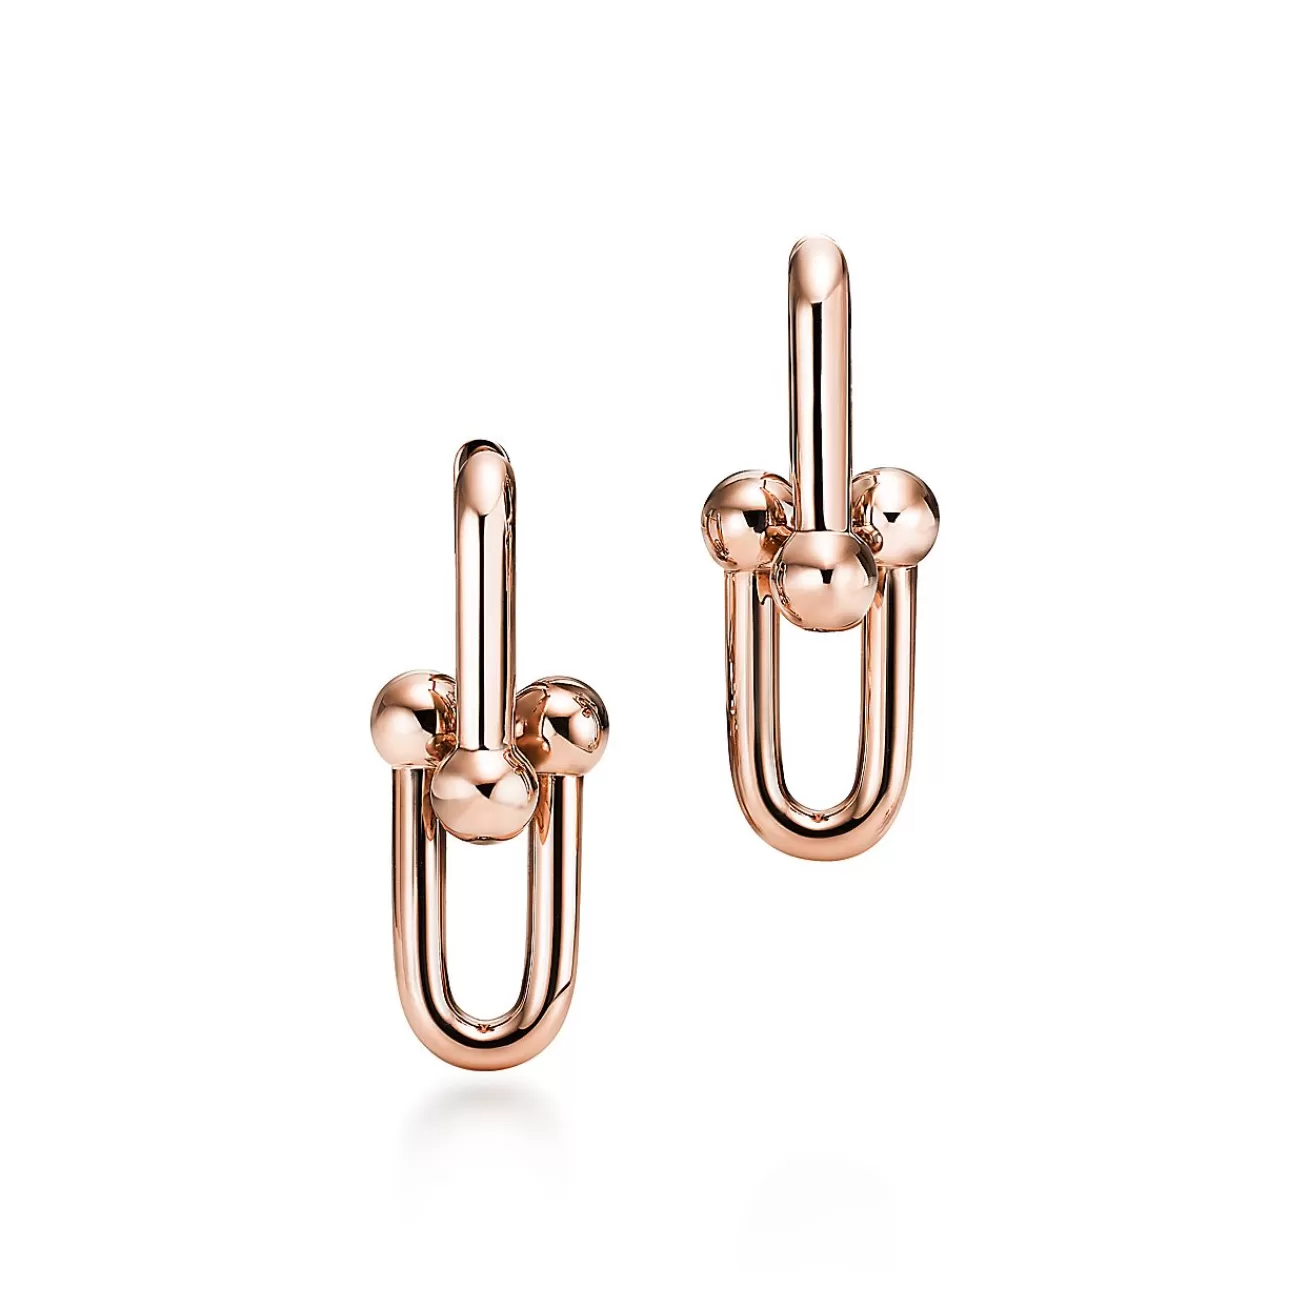 Tiffany & Co. Tiffany HardWear Large Link Earrings in Rose Gold | ^ Earrings | Gifts for Her